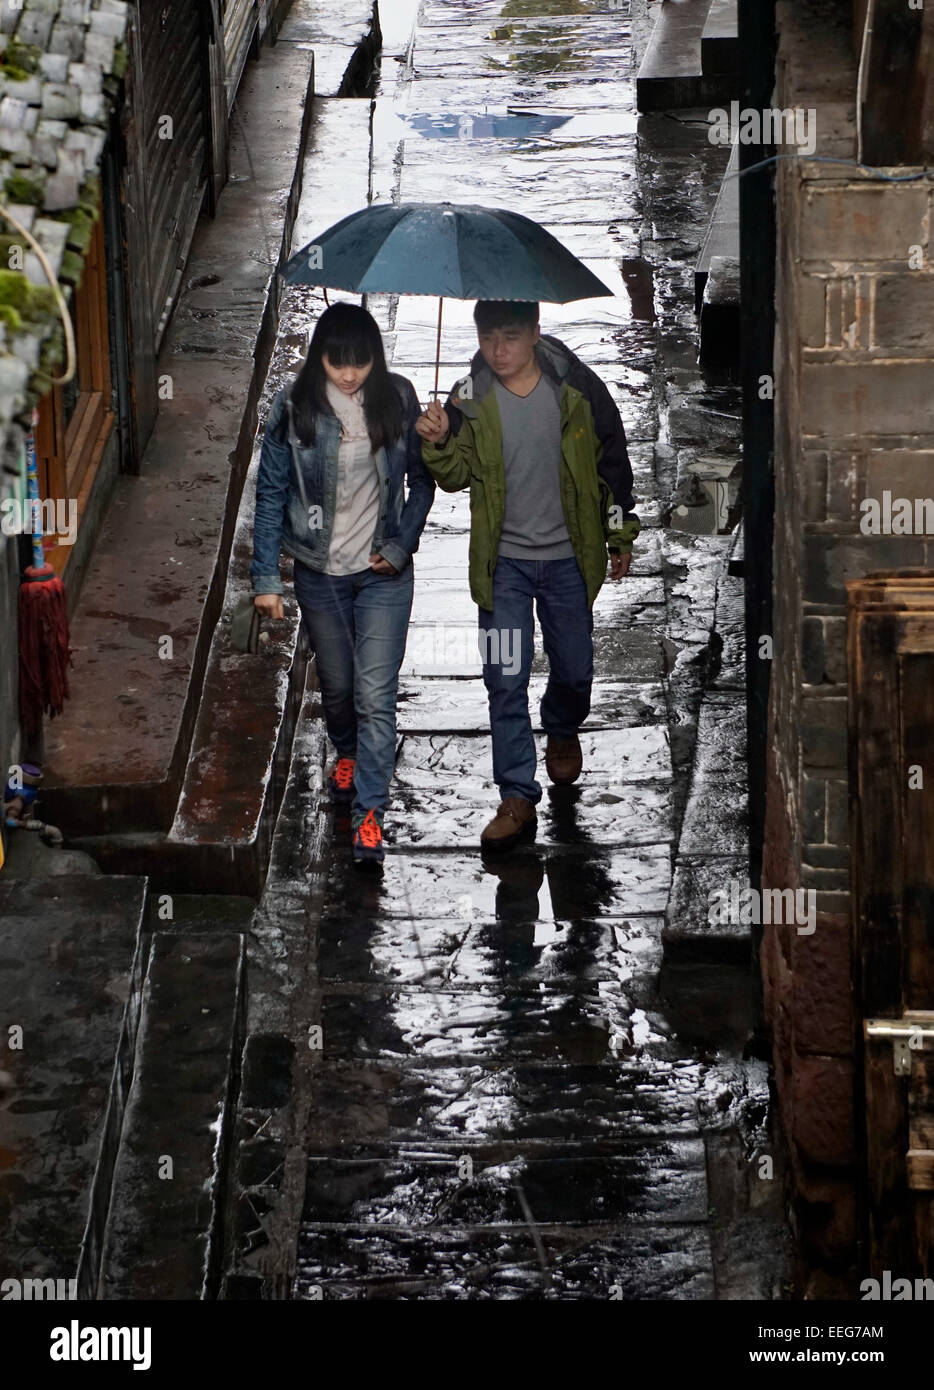 People walking with umbrella in the rain, stone sidewalk, wet, reflection. Stock Photo